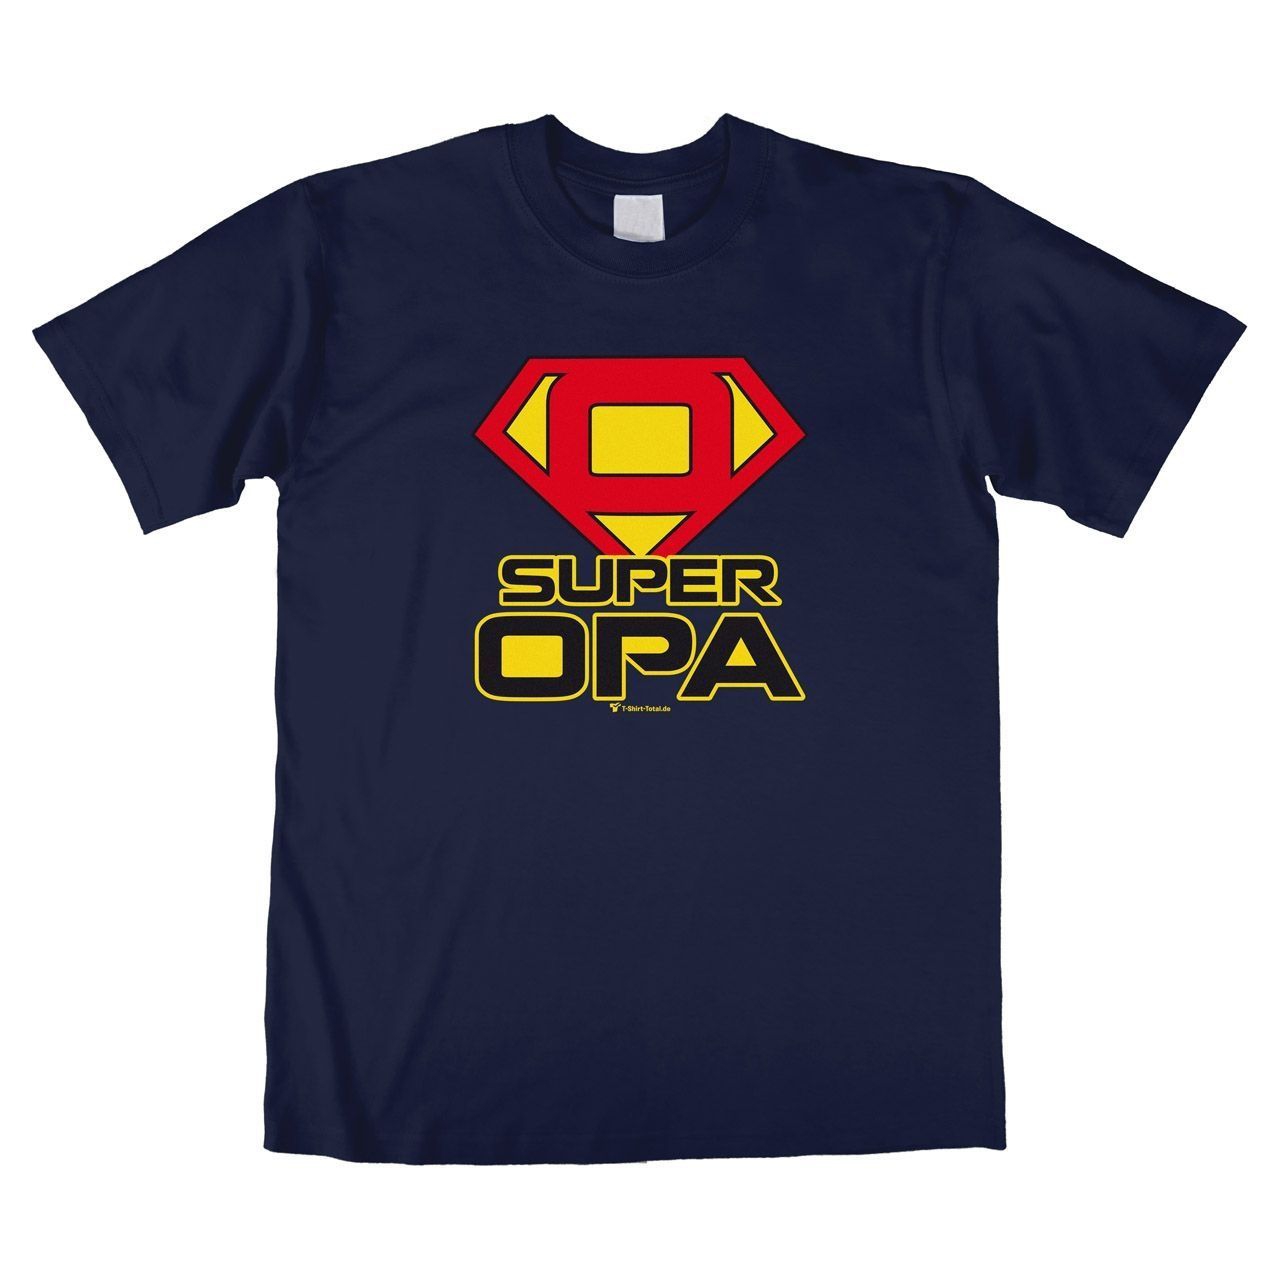 Super Opa Unisex T-Shirt navy Large